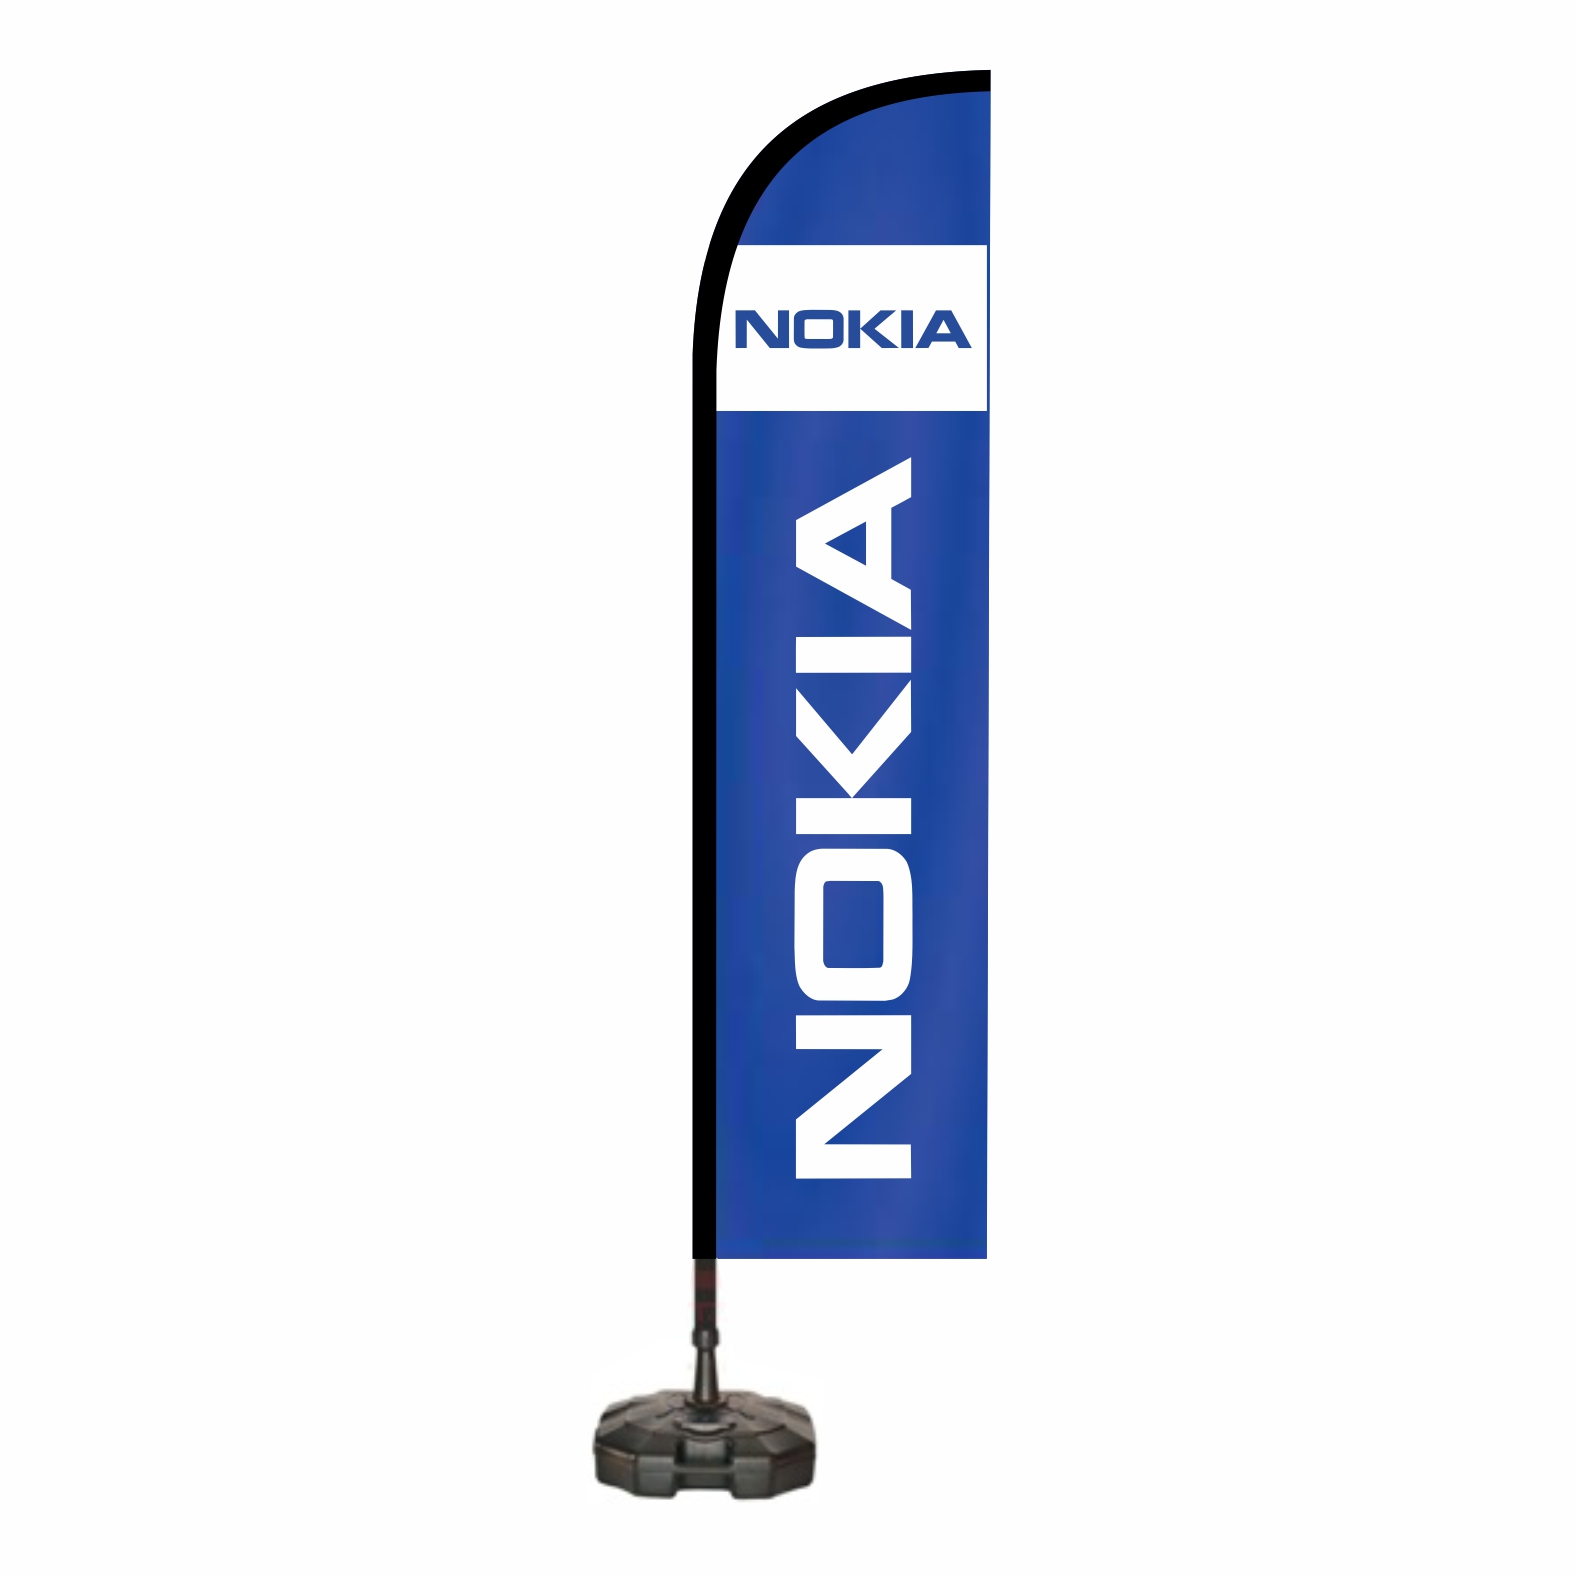 Nokia Yelken Bayraklar Nerede satlr